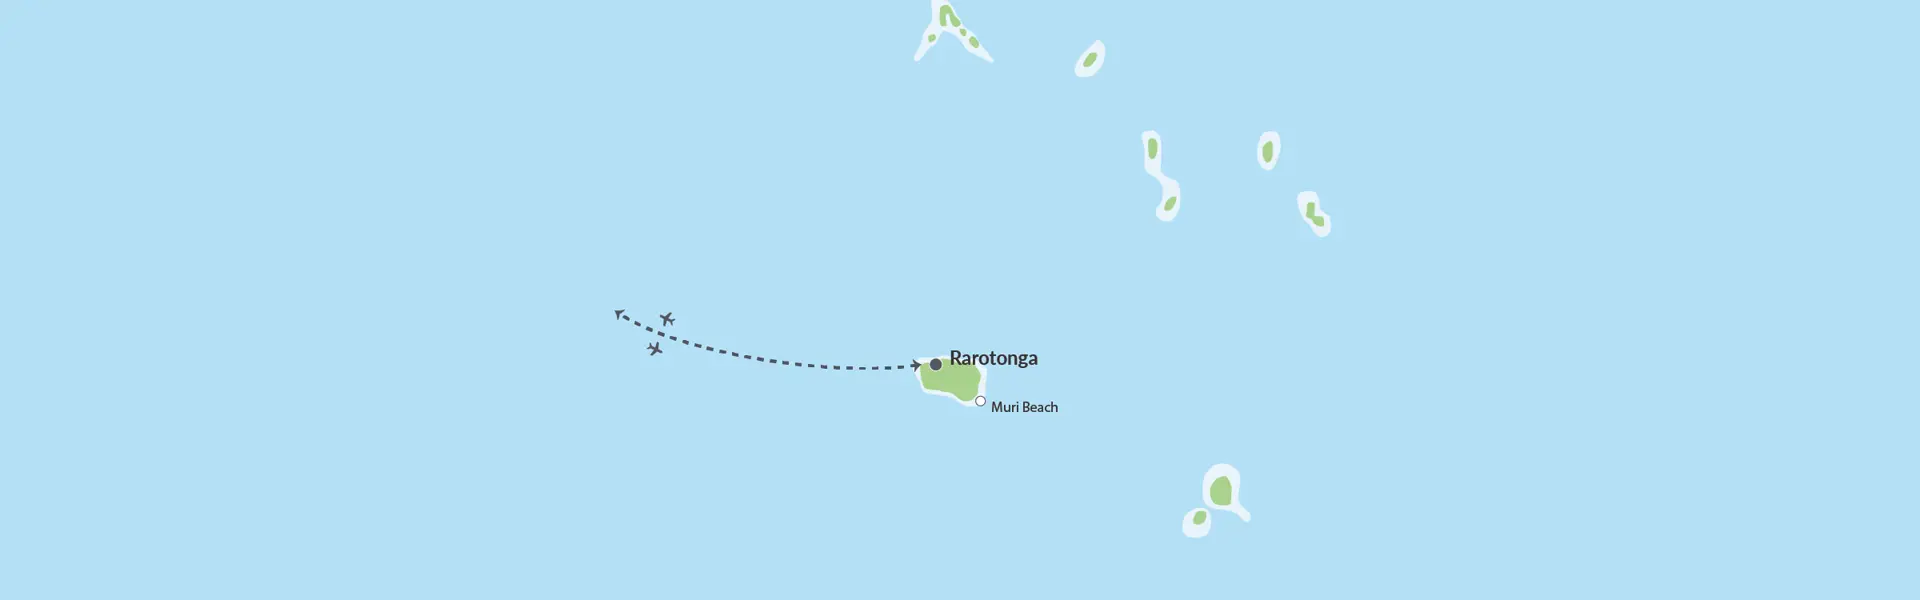 DK Sol Og Strand På Rarotonga I Cook Islands